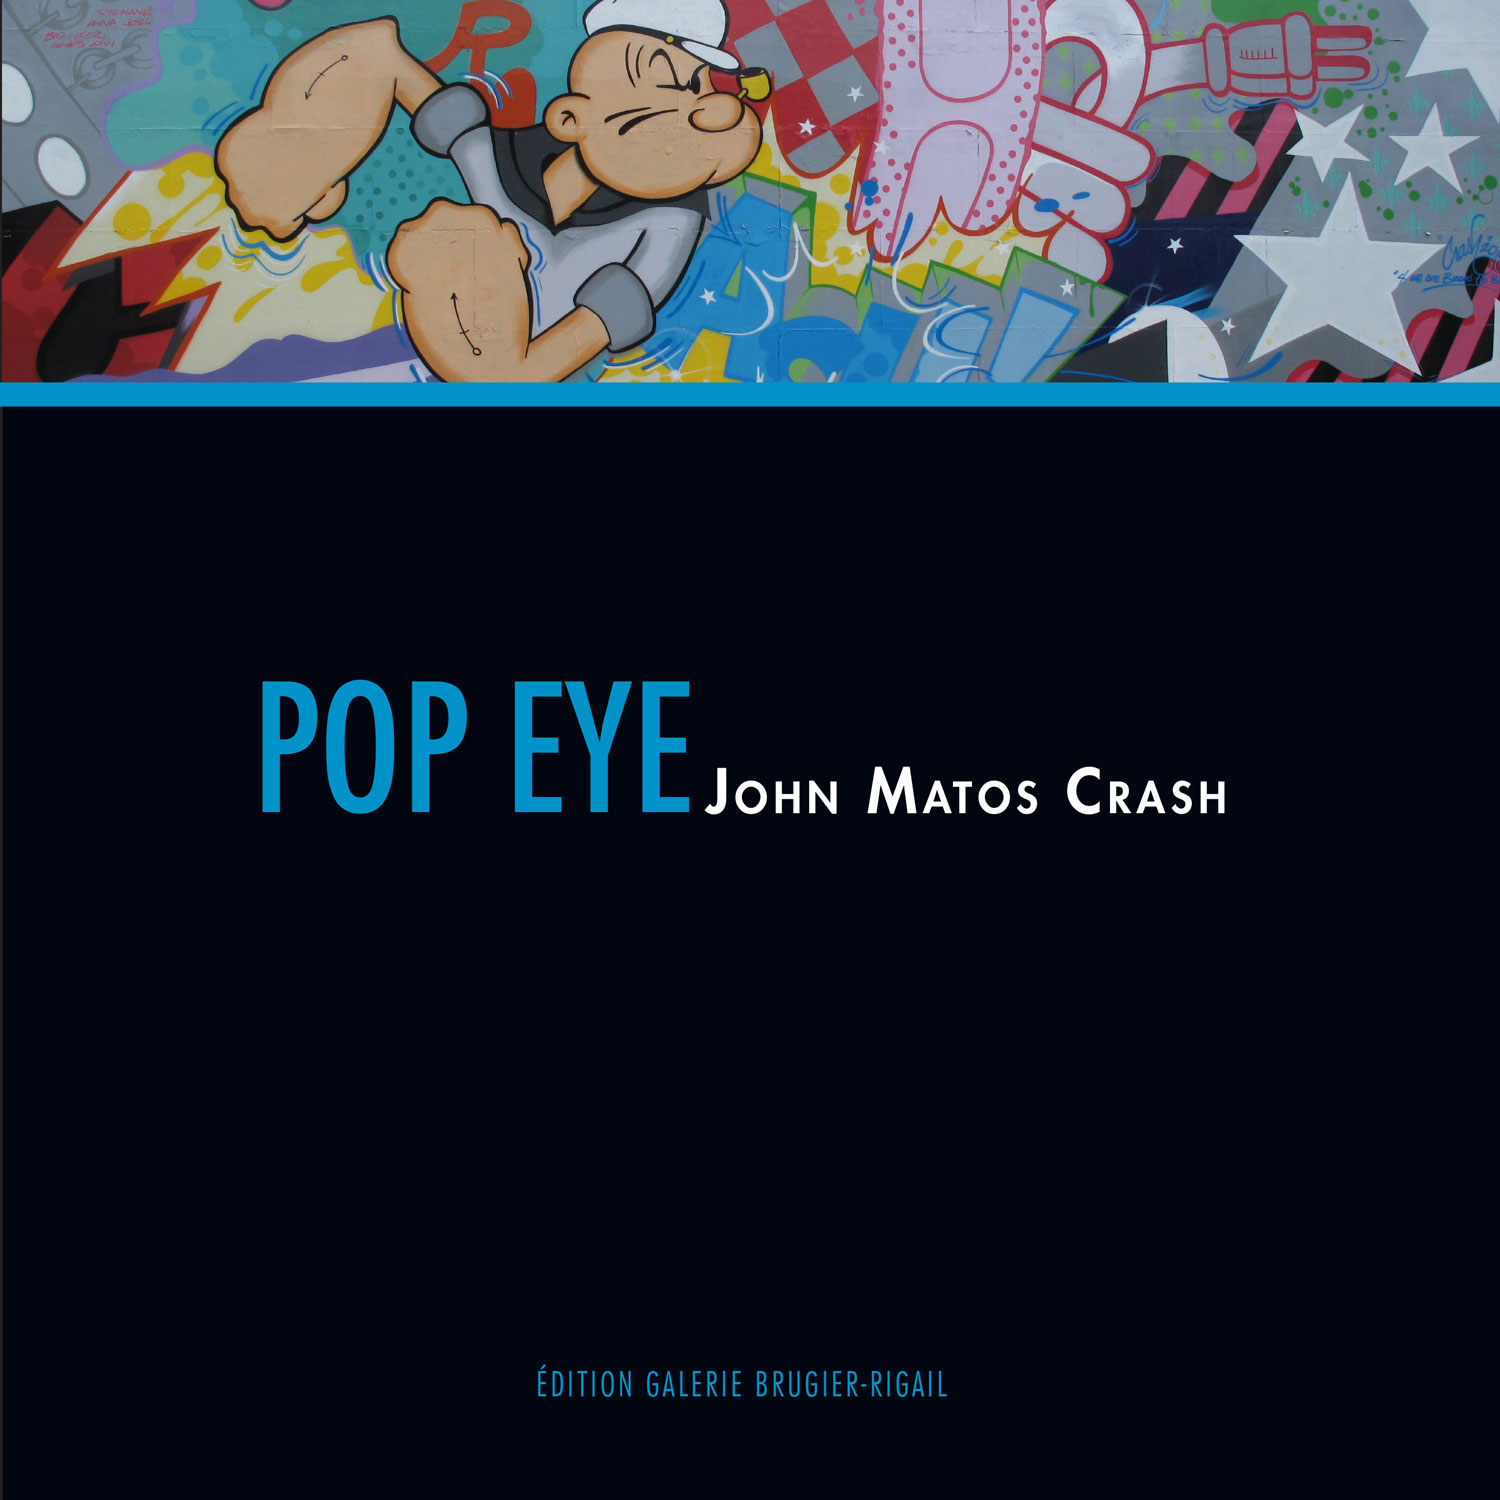 John Matos Crash - Pop Eye - Catalogue de l'exposition, 2013